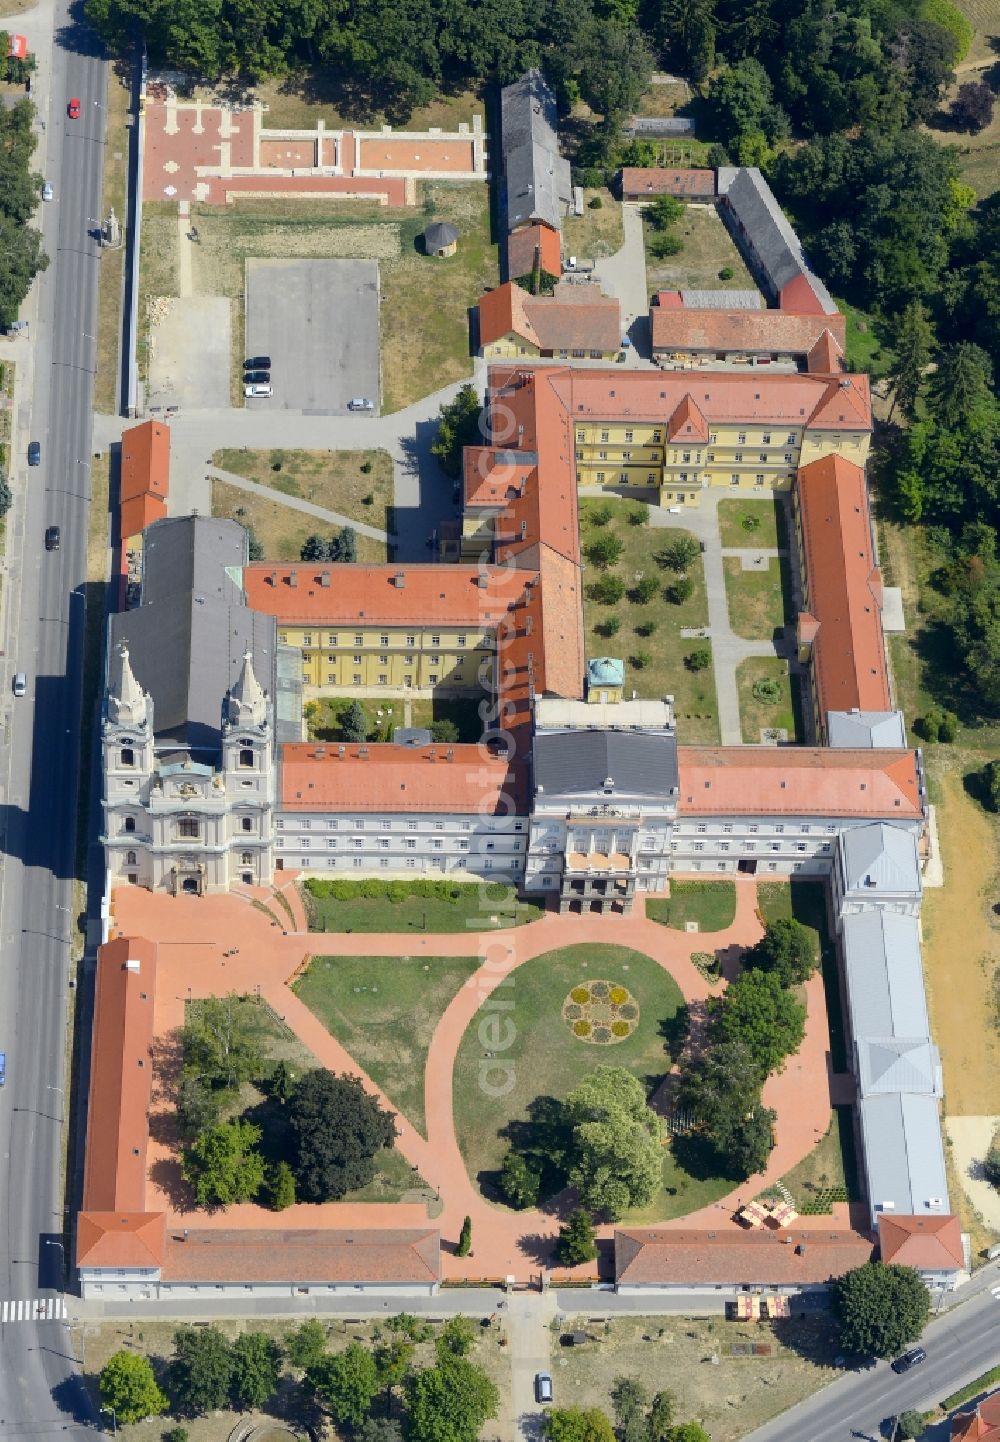 Aerial image Zirc - Complex of buildings of the monastery in Zirc in Wesprim, Hungary